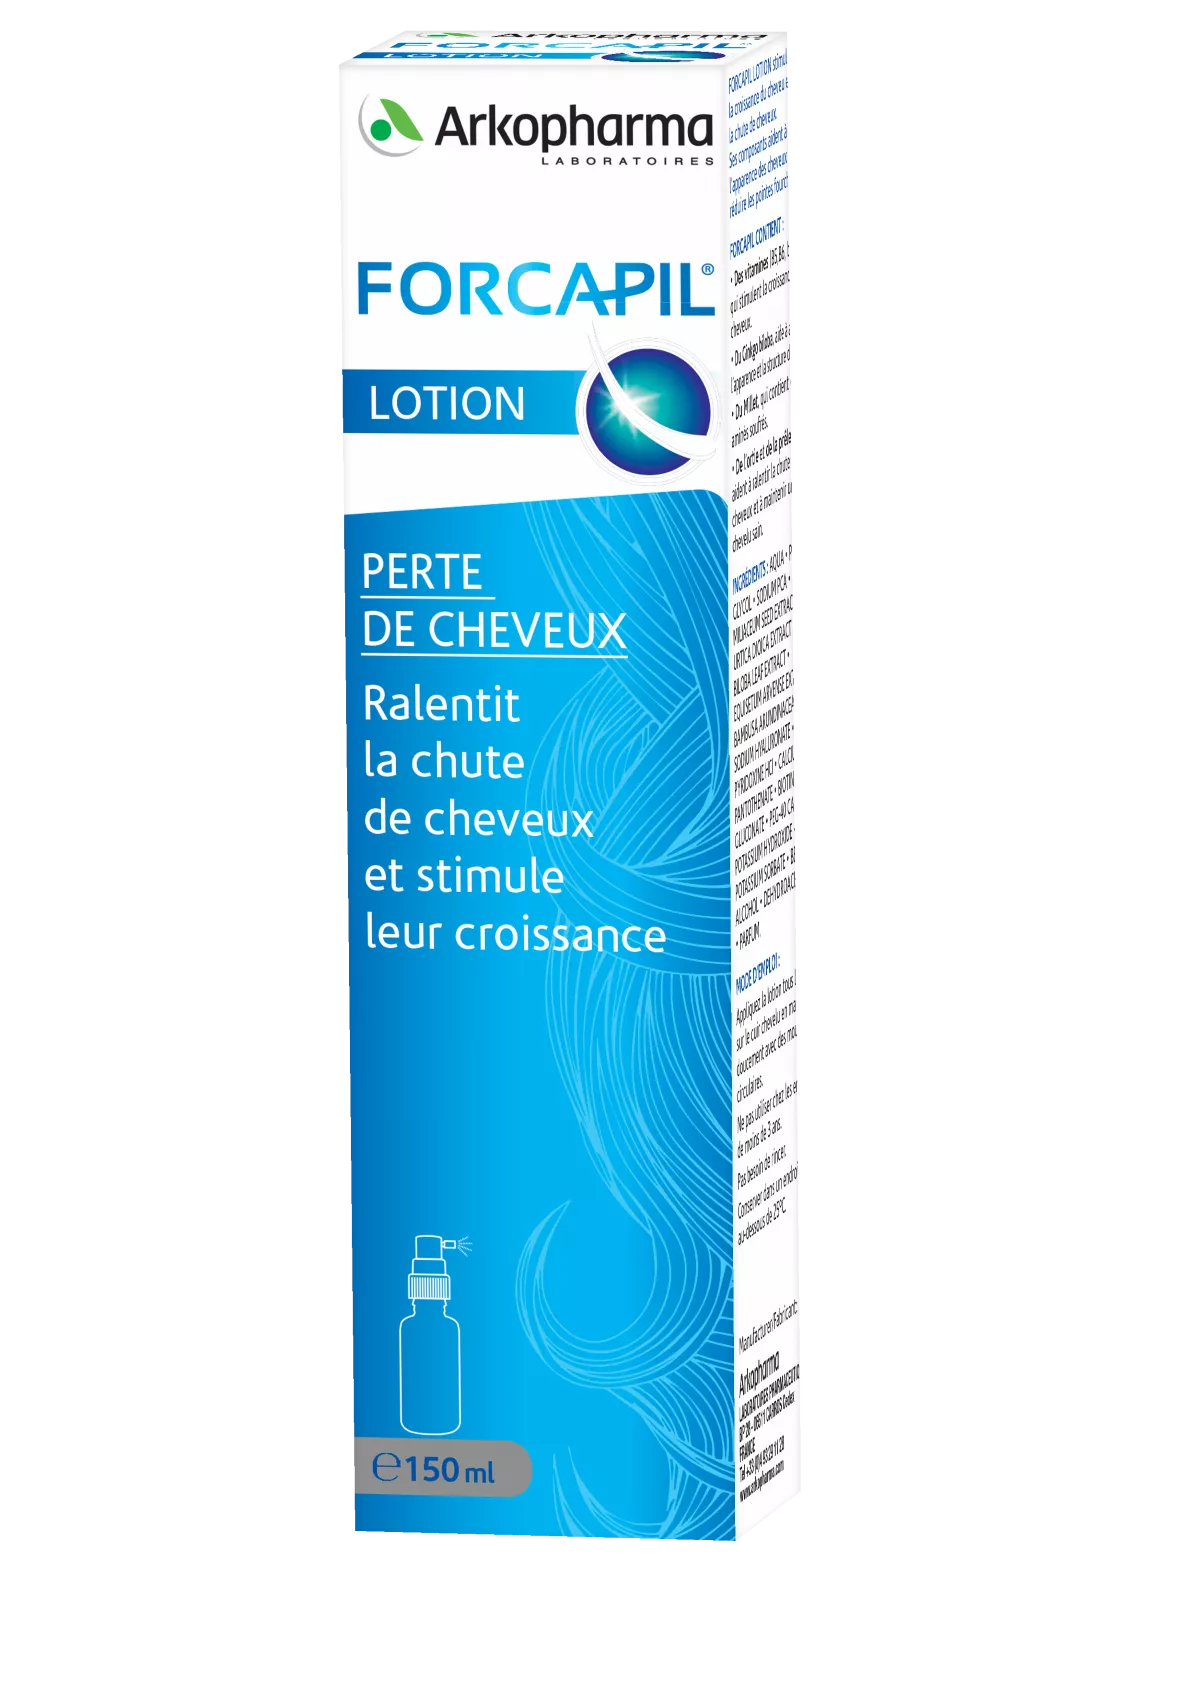 Forcapil lotiune, 150 ml, Arkopharma, [],remediumfarm.ro